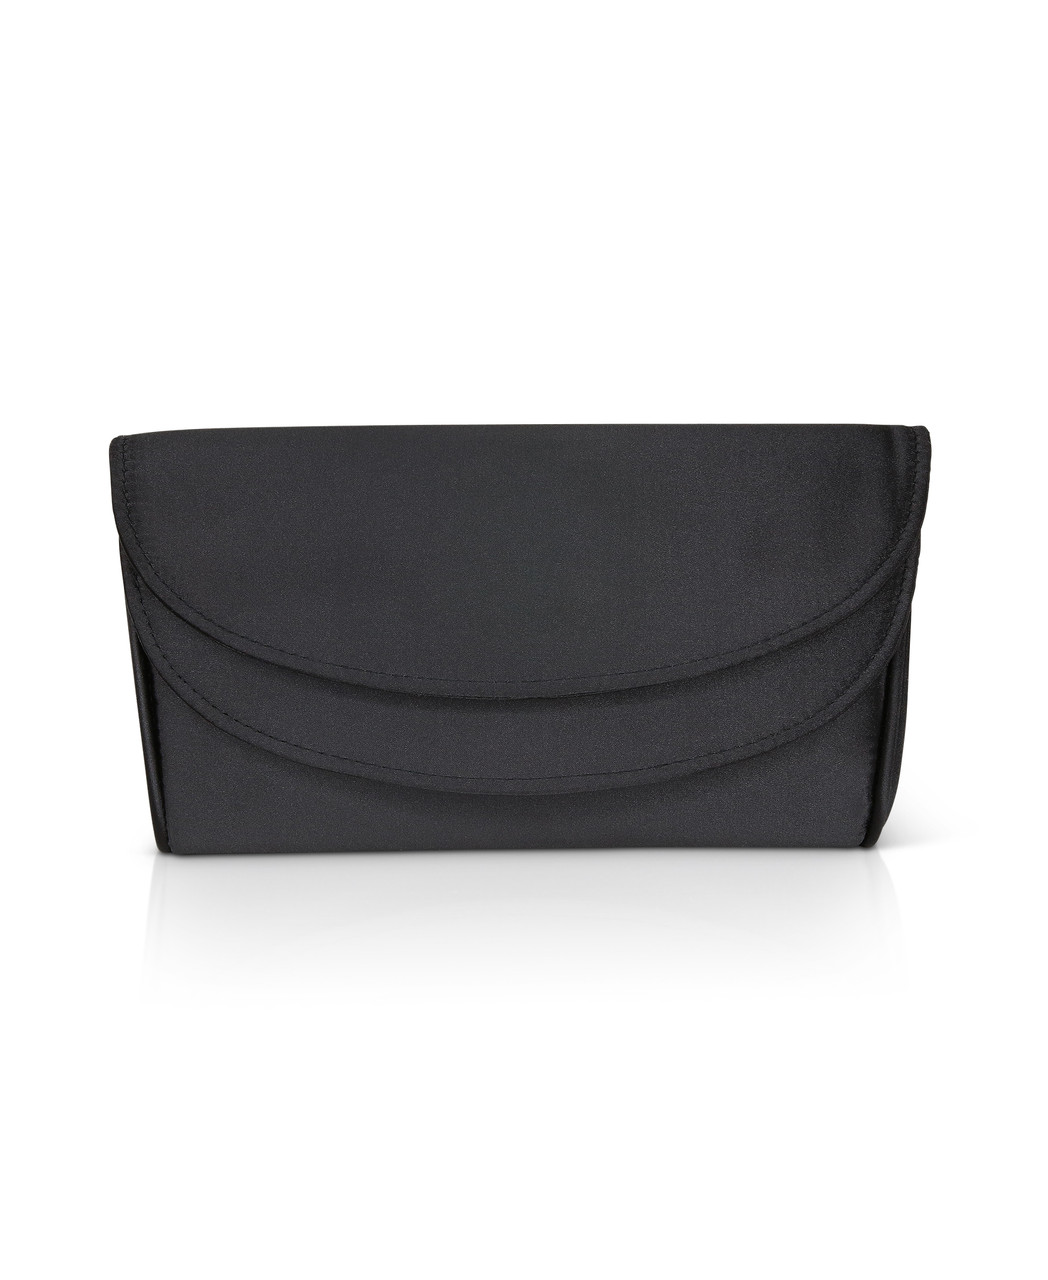 Black Satin Clutch Purse Elegant Box Evening Bag